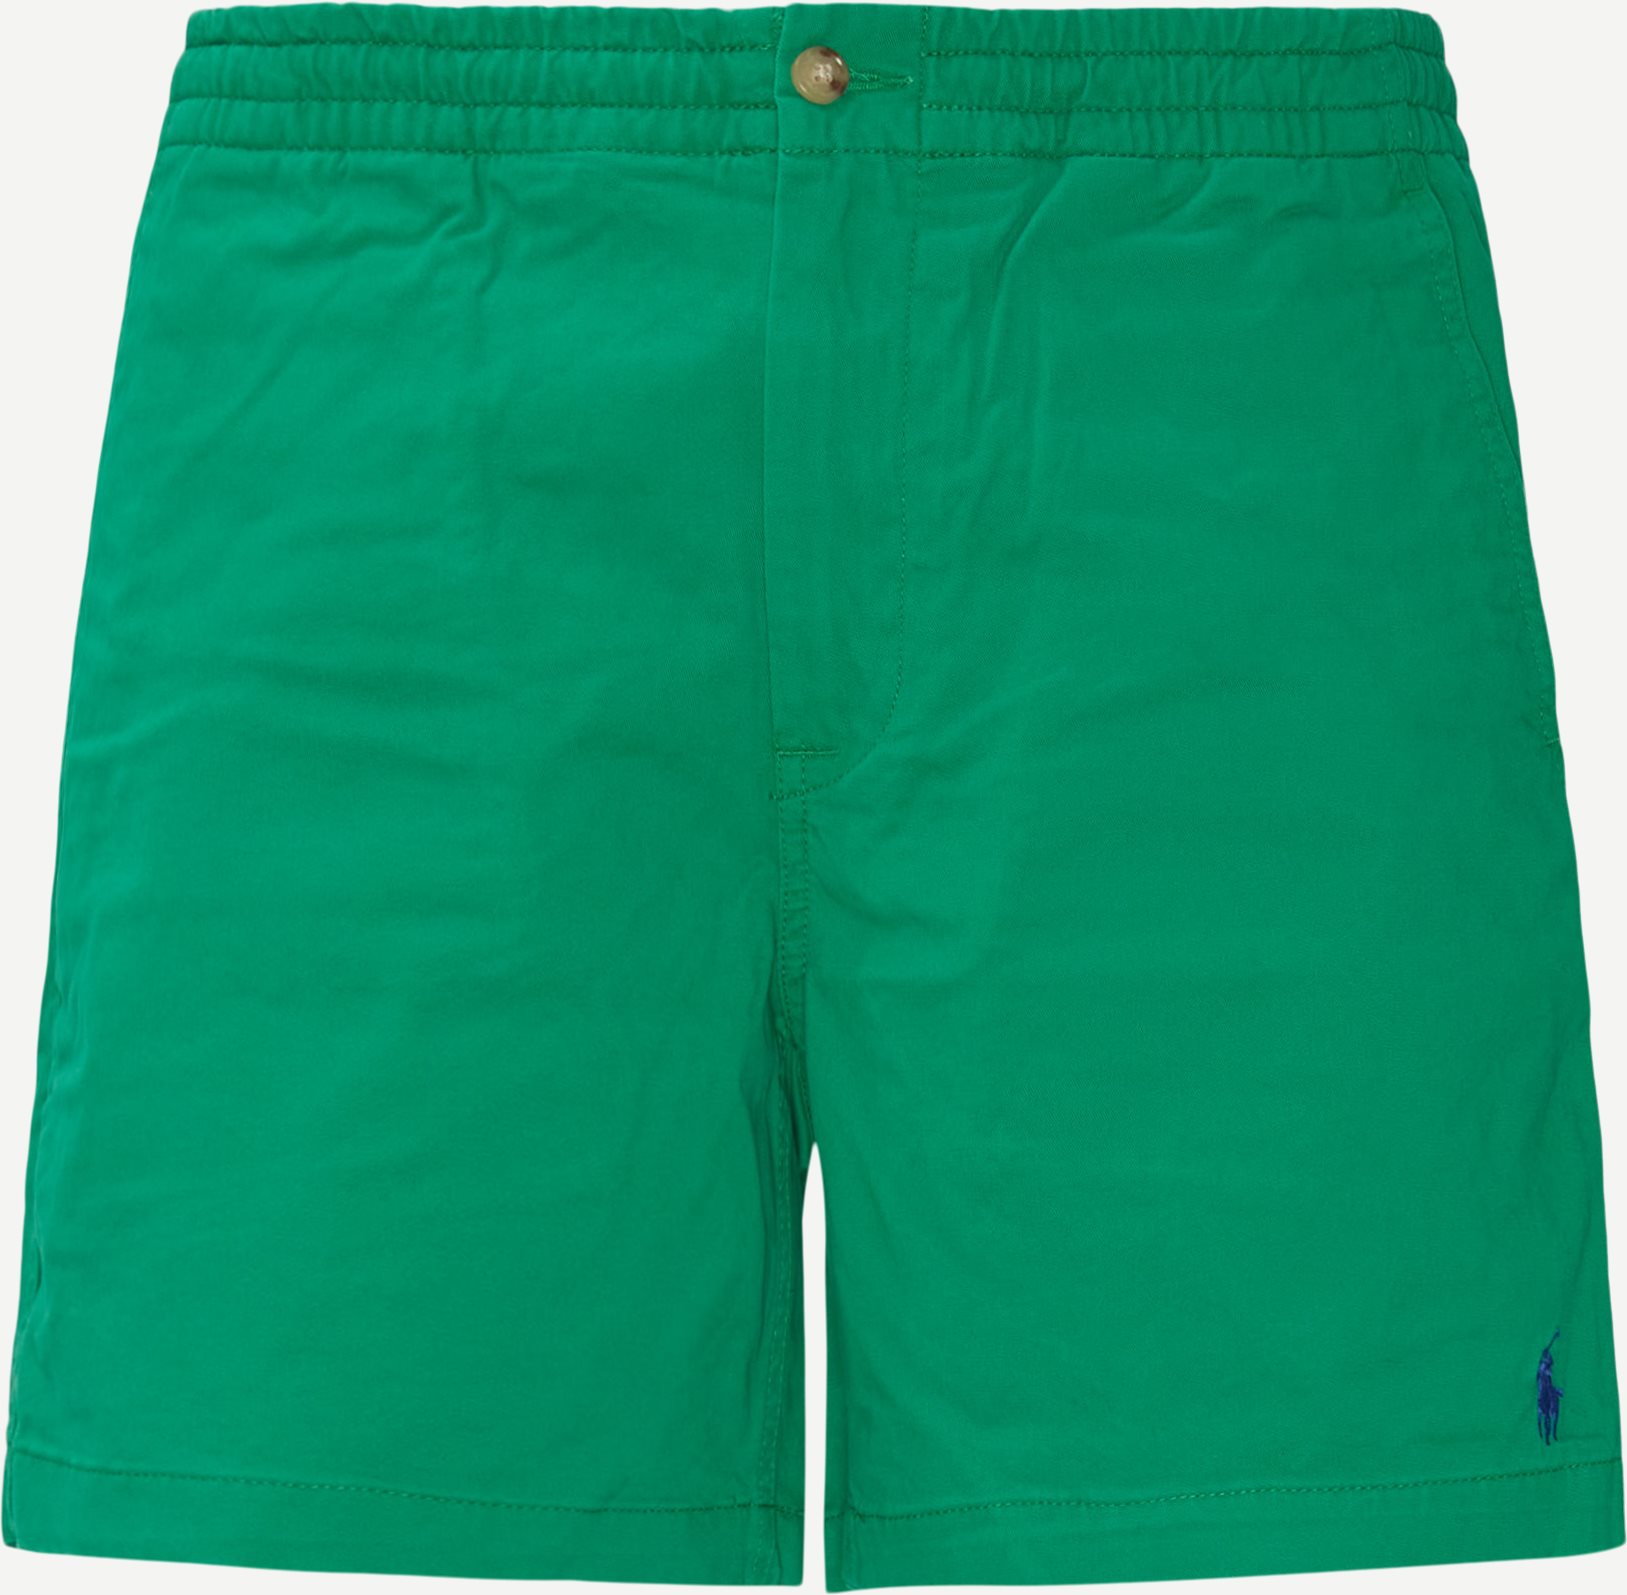 Shorts - Classic fit - Green